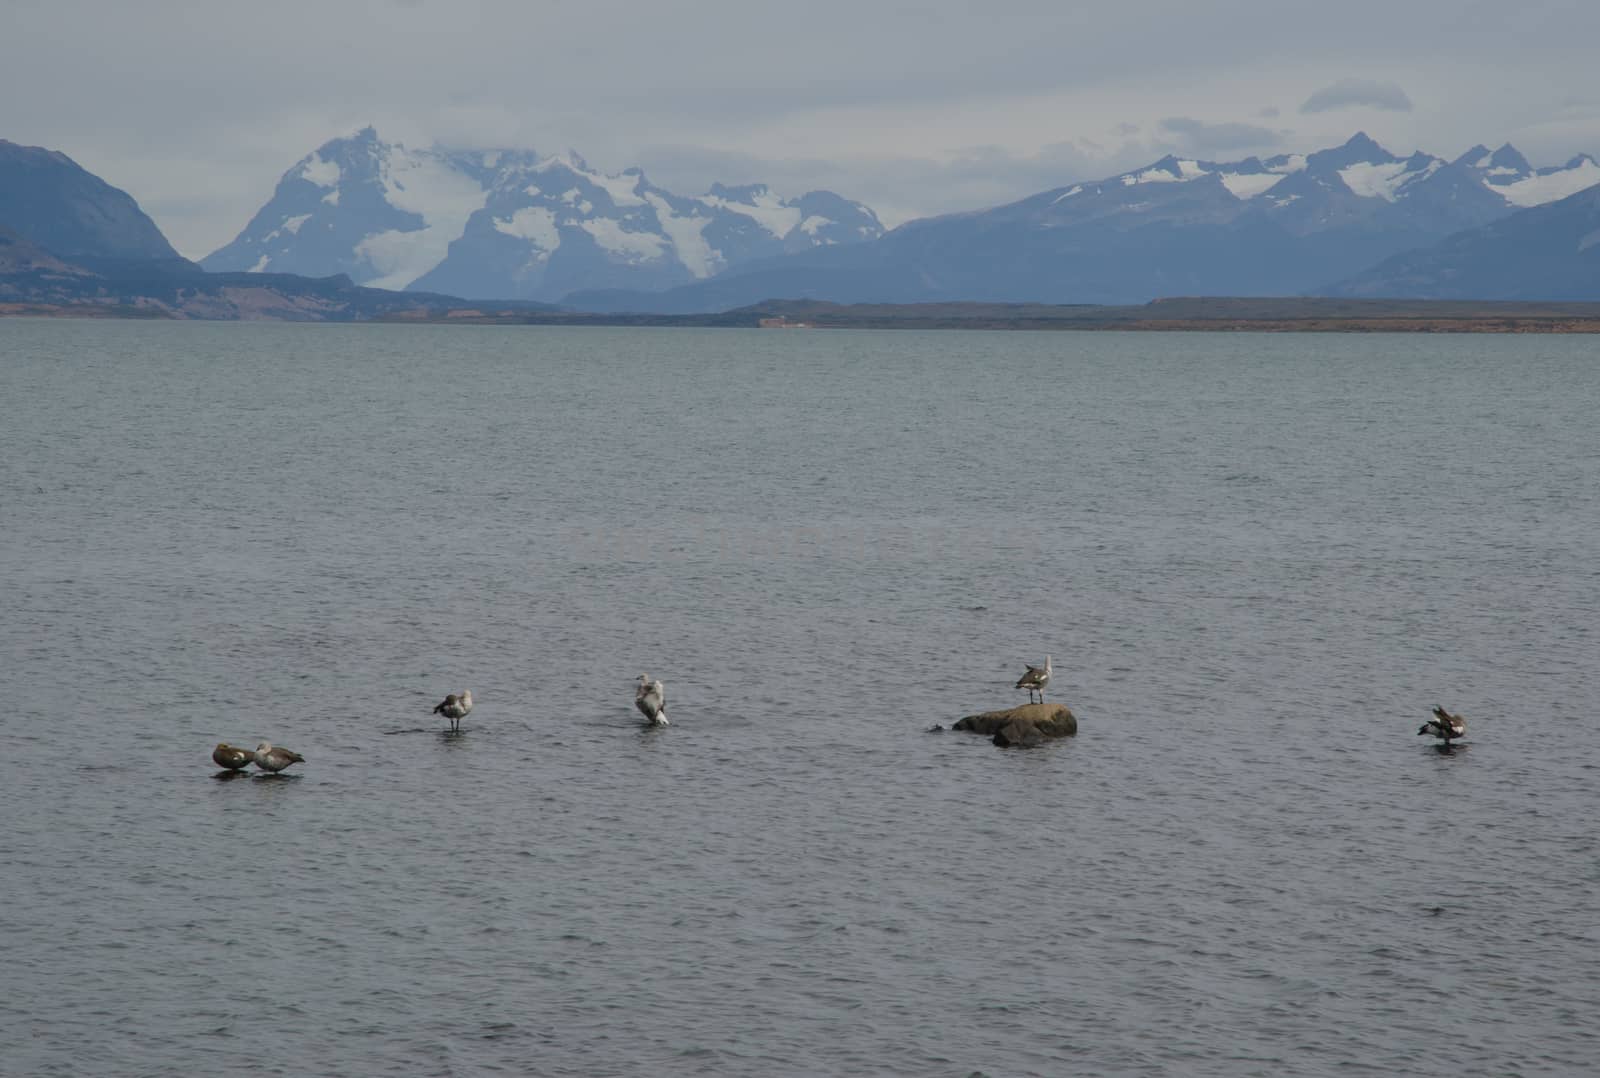 Upland geese Chloephaga picta on the sea. by VictorSuarez